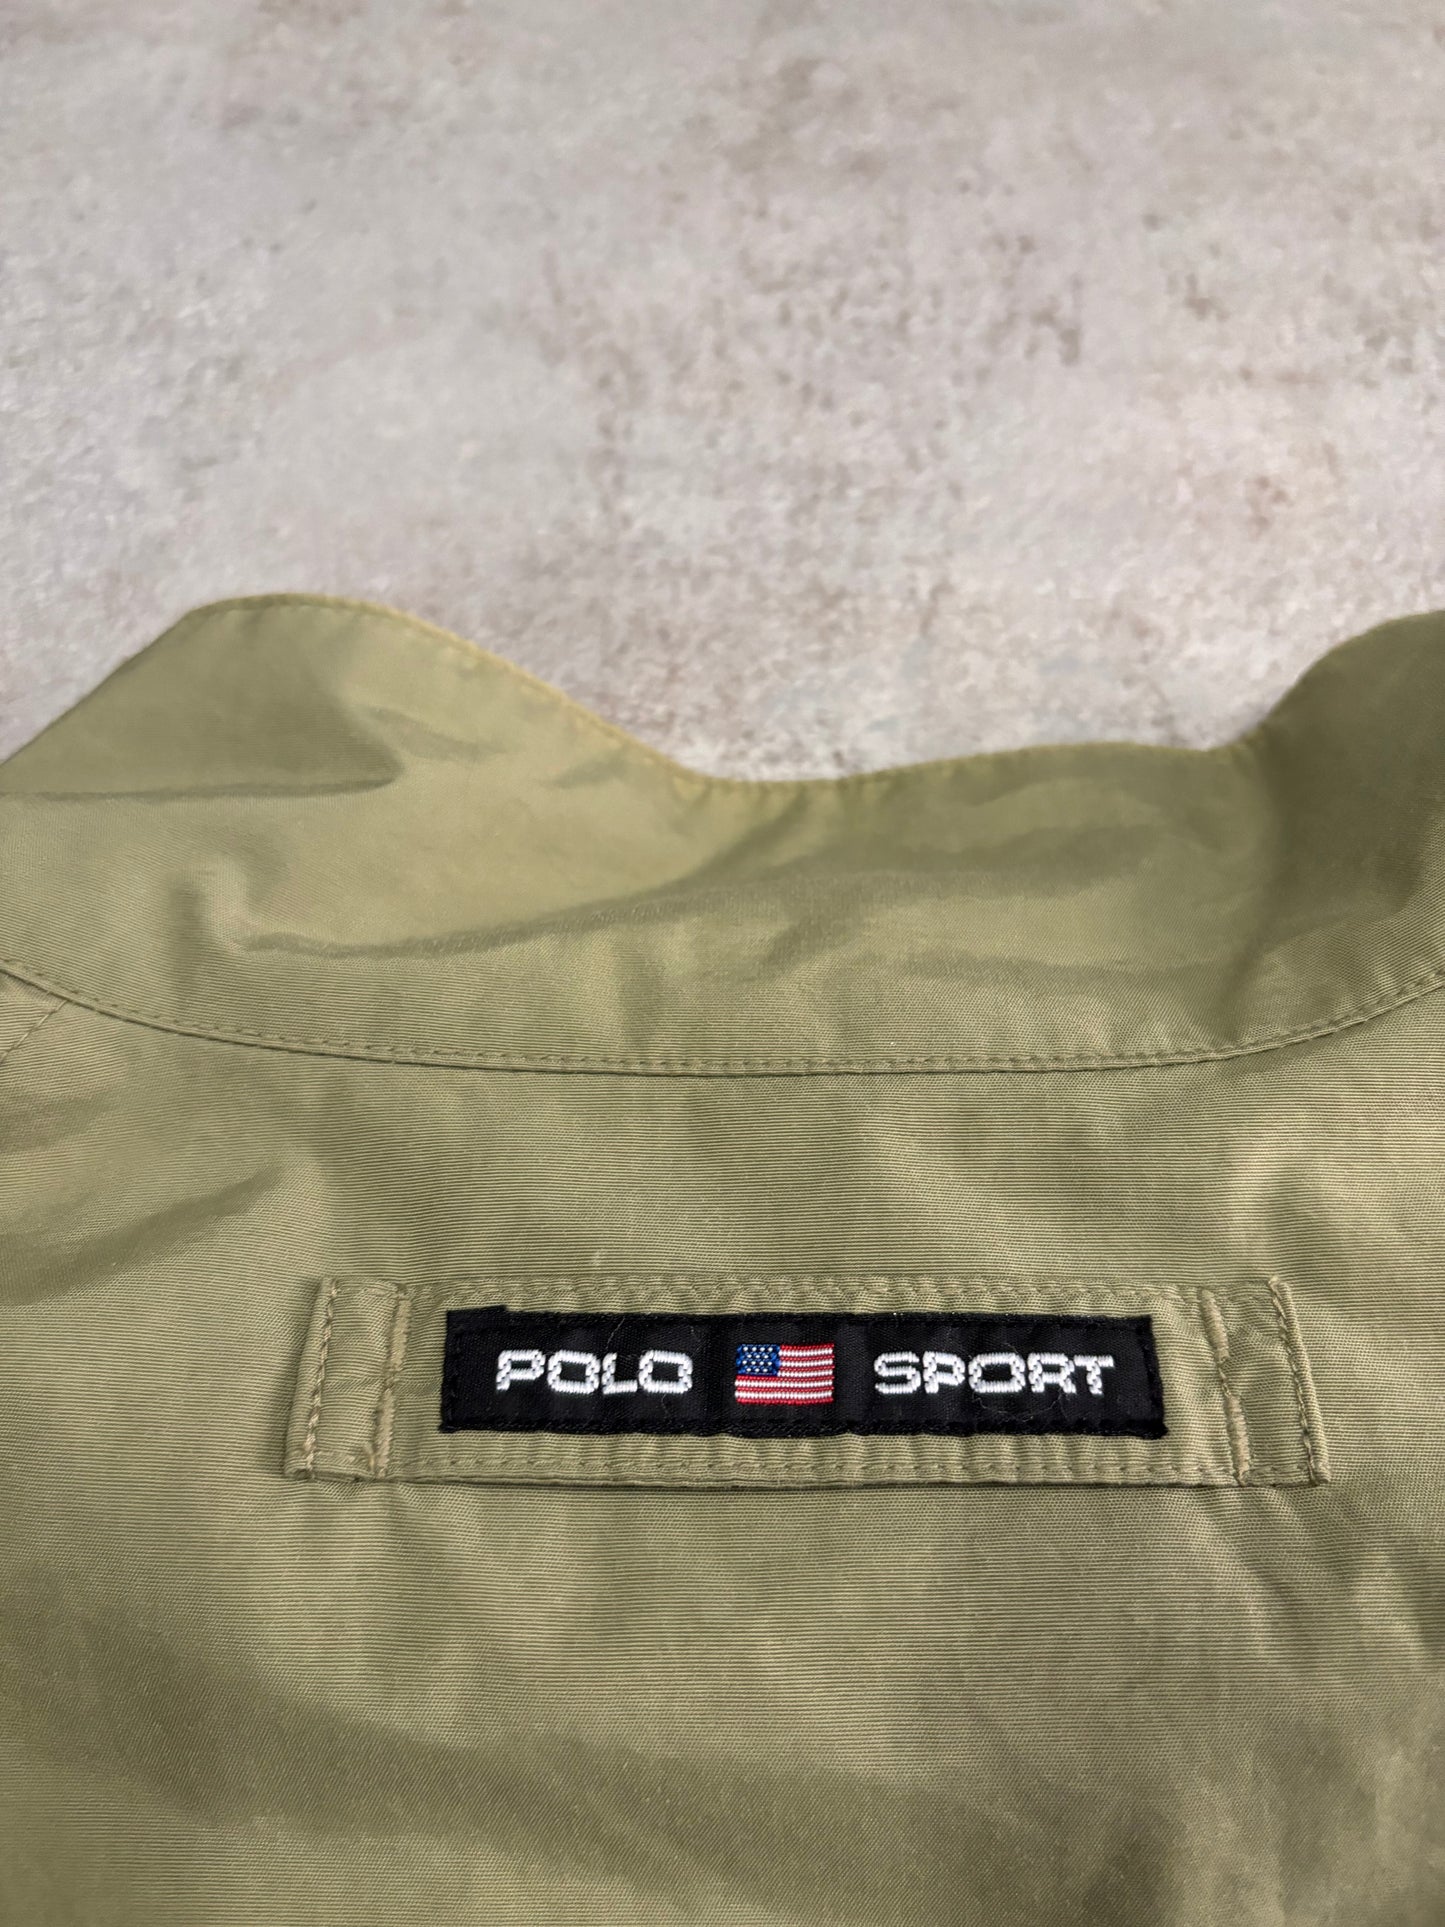 Polo Sport Special Edition 00s Vintage Windbreaker Jacket - L